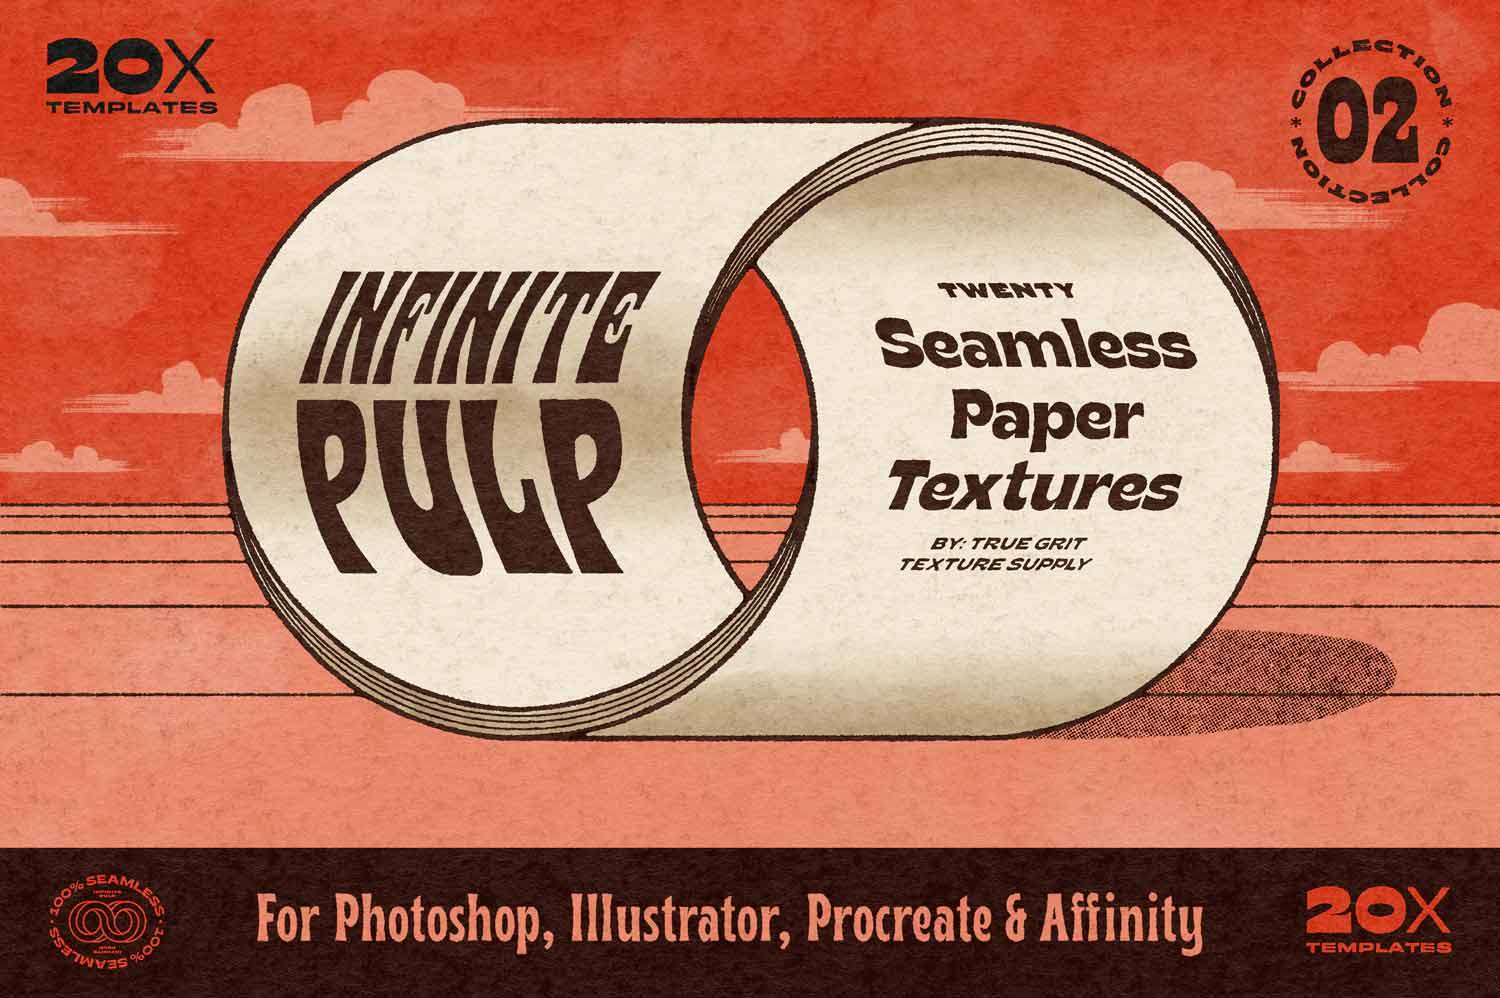 Infinite Pulp 2 by True Grit Texture Supply